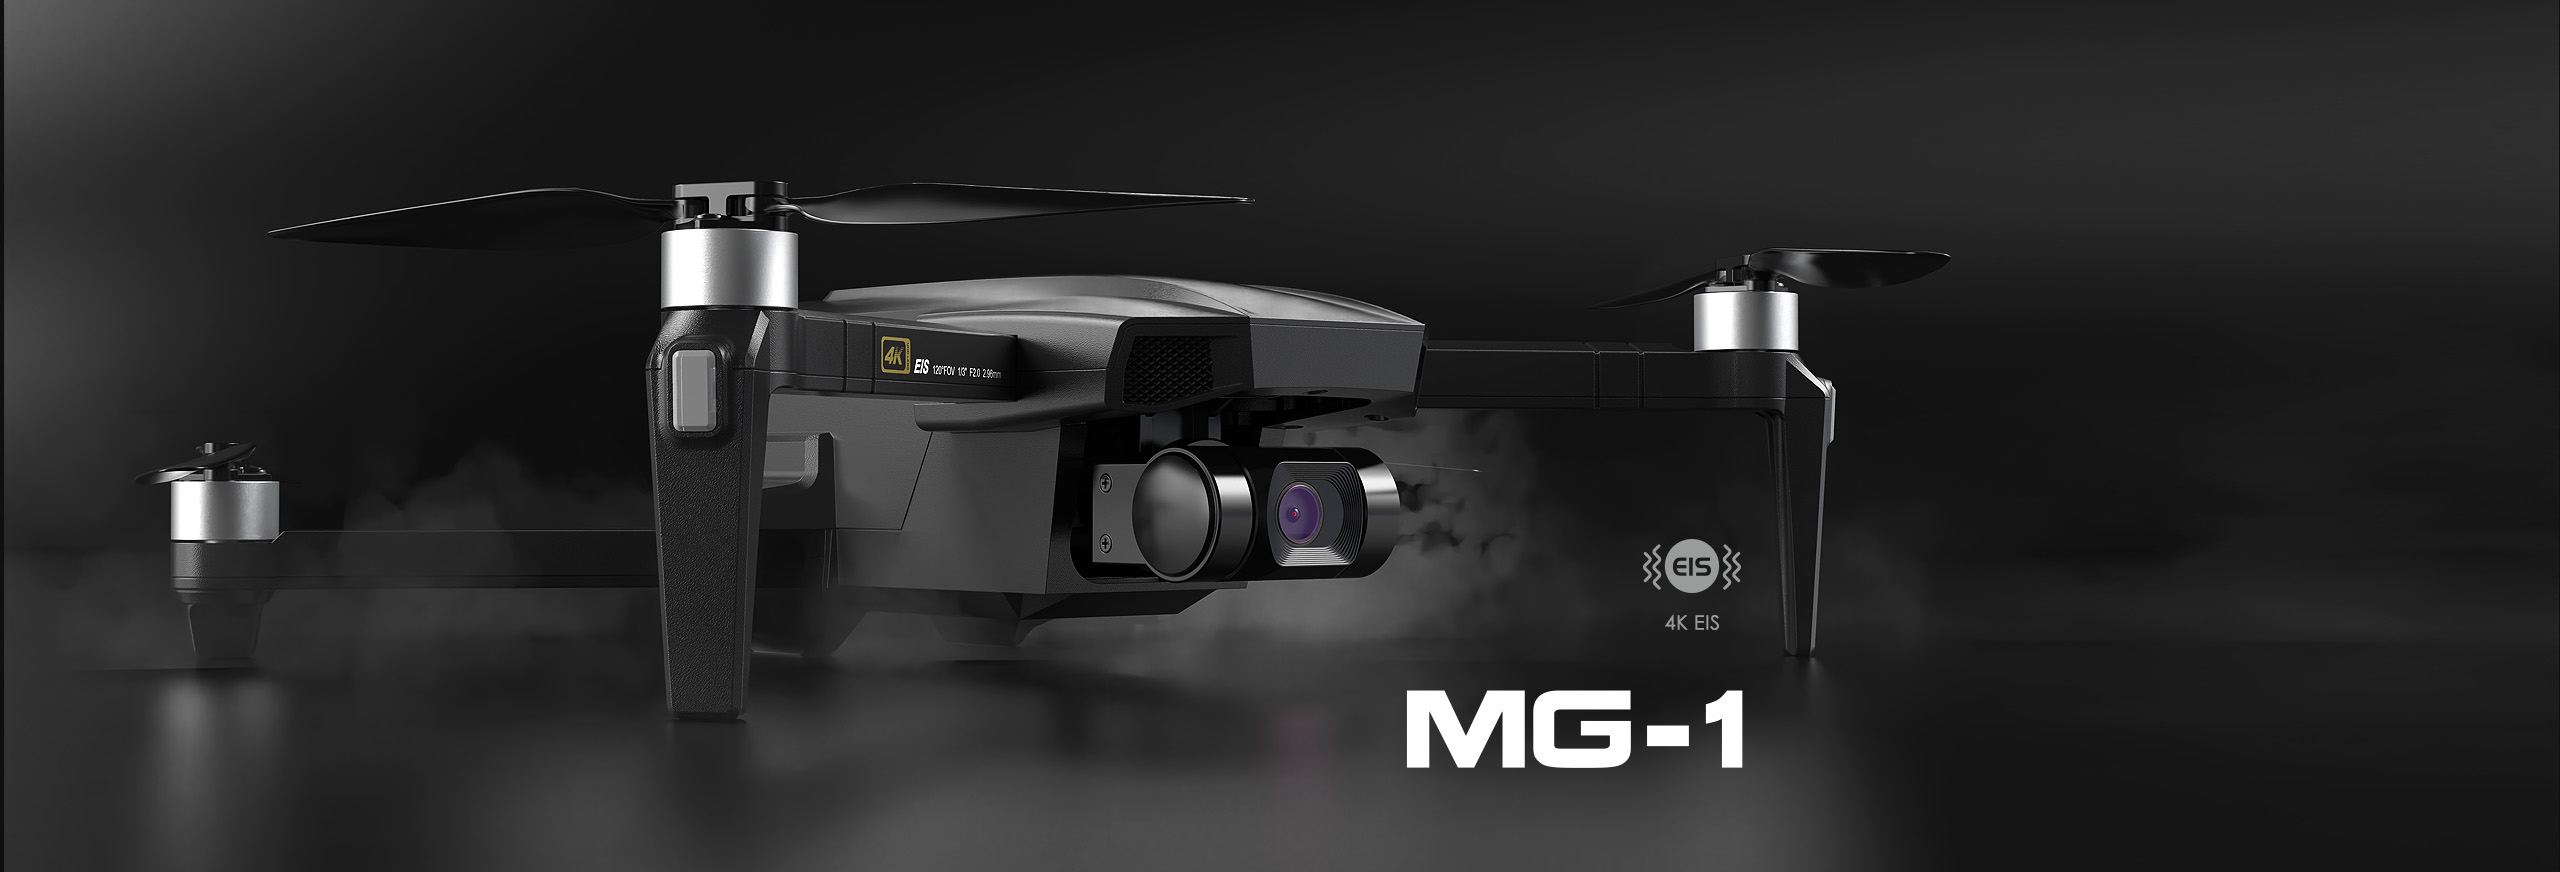 MJX-MG-1-5G-WiFi-FPV-With-2-Axis-Gimbal-4K-EIS-HD-Camera-25mins-Flight-Time-GPS-Optical-Flow-Positio-1911015-1